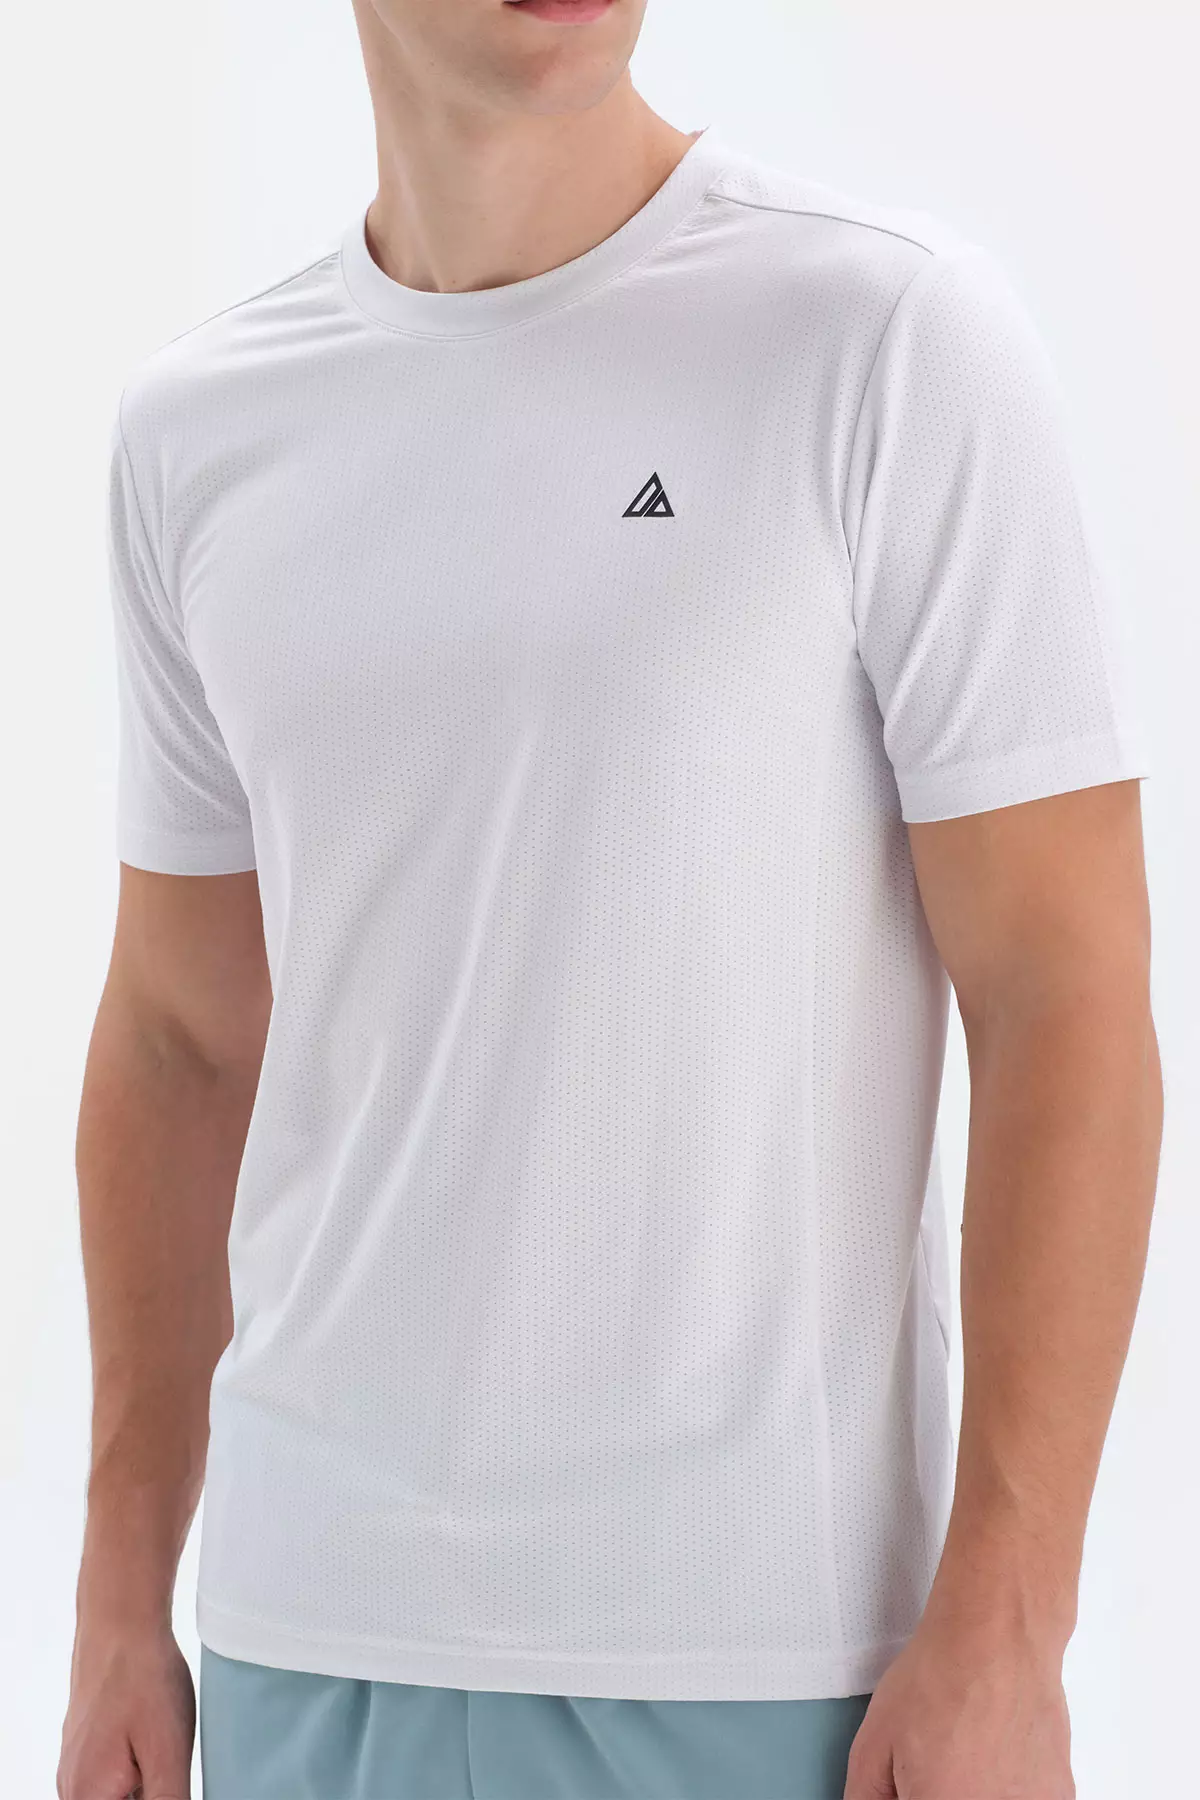 White T-Shirt, Crew Neck, Regular Fit, Short Sleeve Activewear for Men